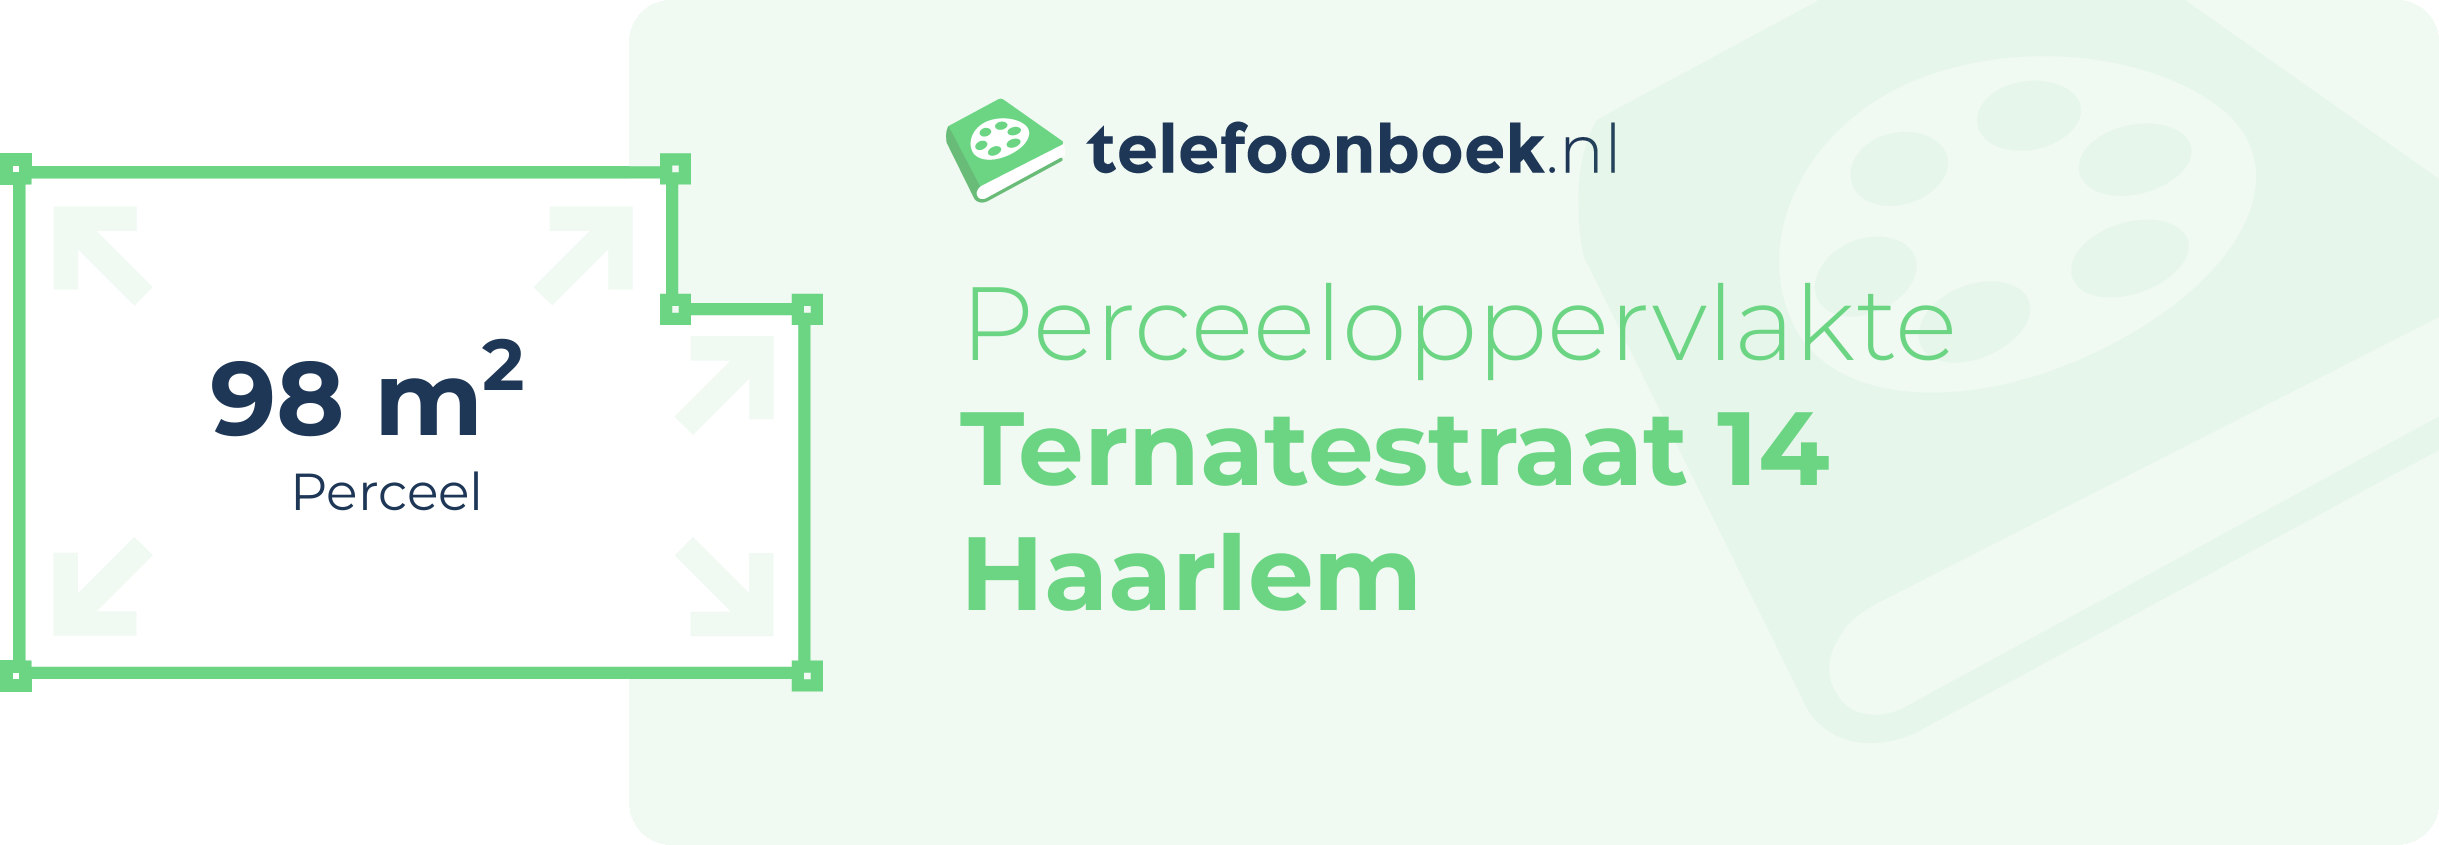 Perceeloppervlakte Ternatestraat 14 Haarlem